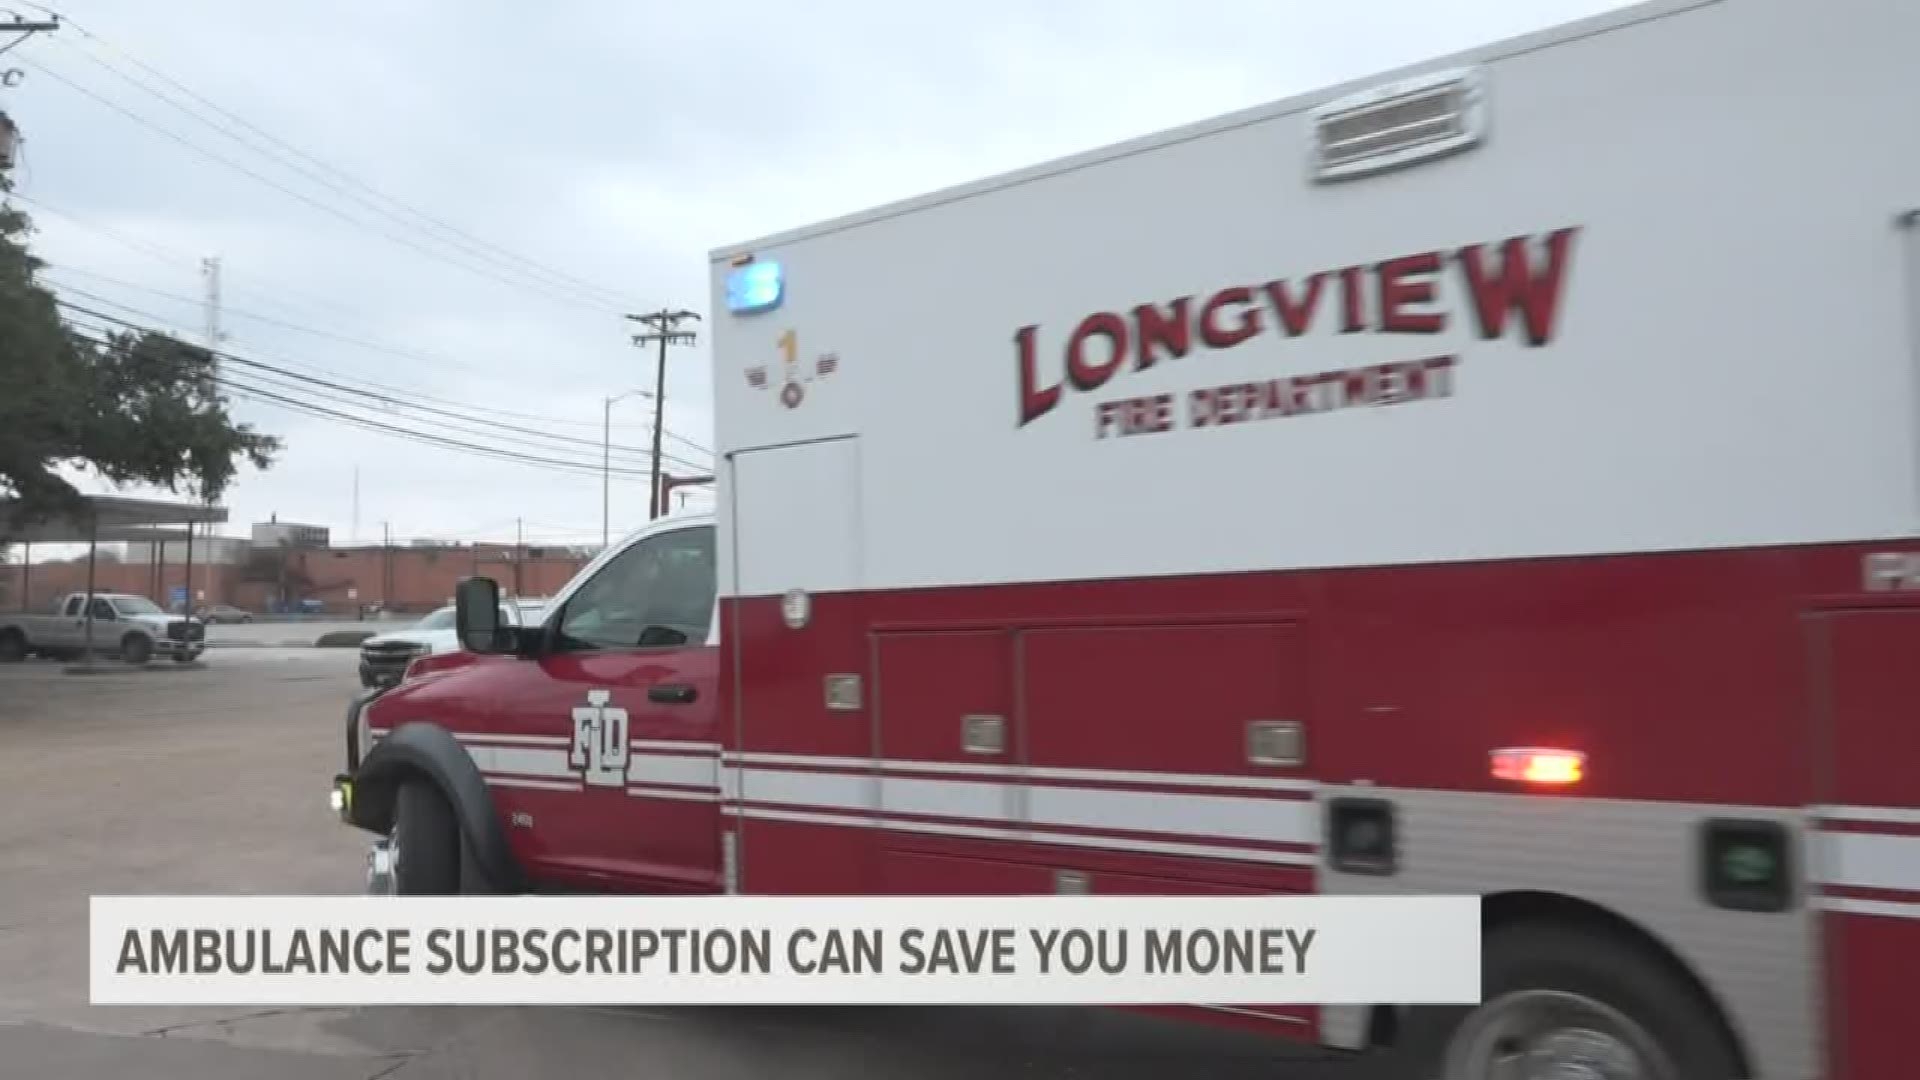 Longview ambulance can save you hundreds of dollars